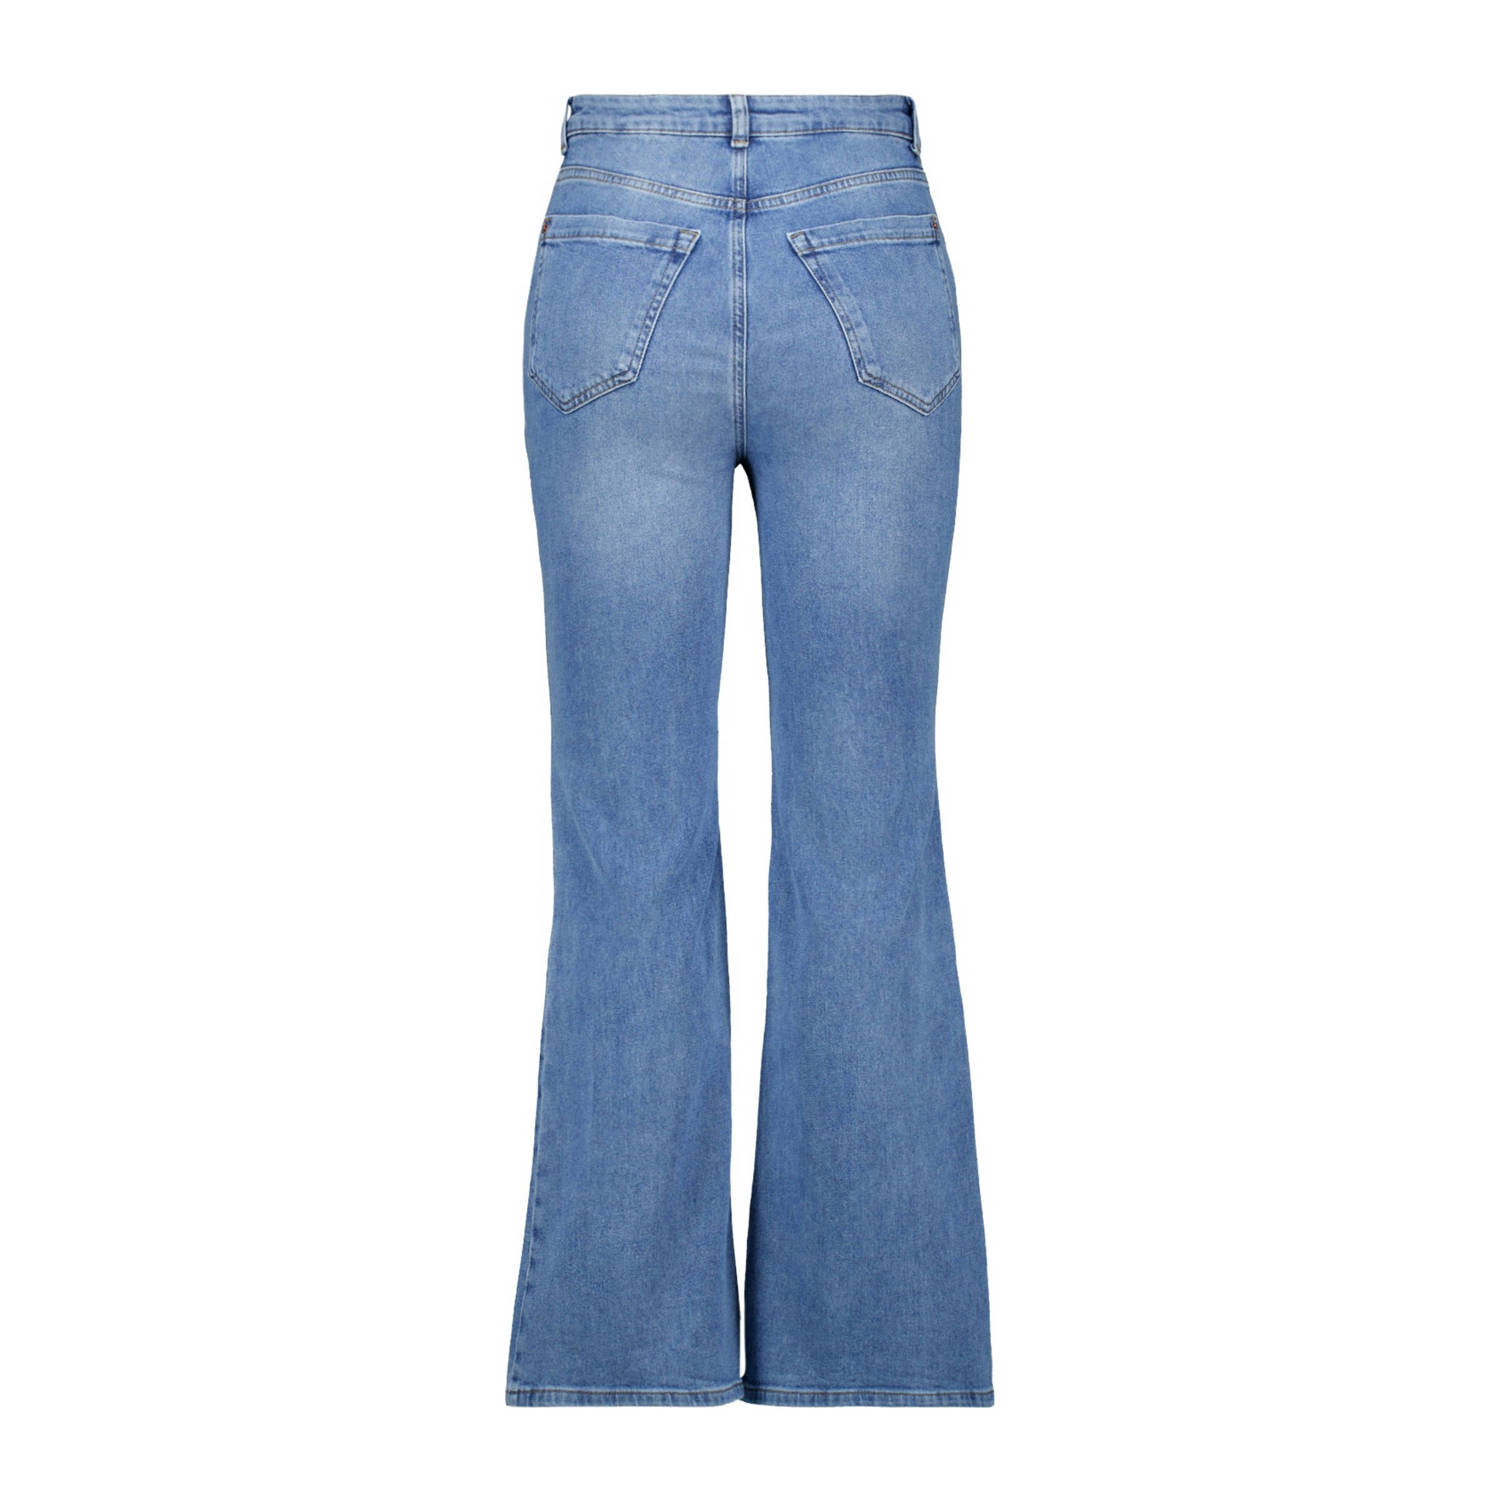 MS Mode high waist flared jeans stonewash light blue denim